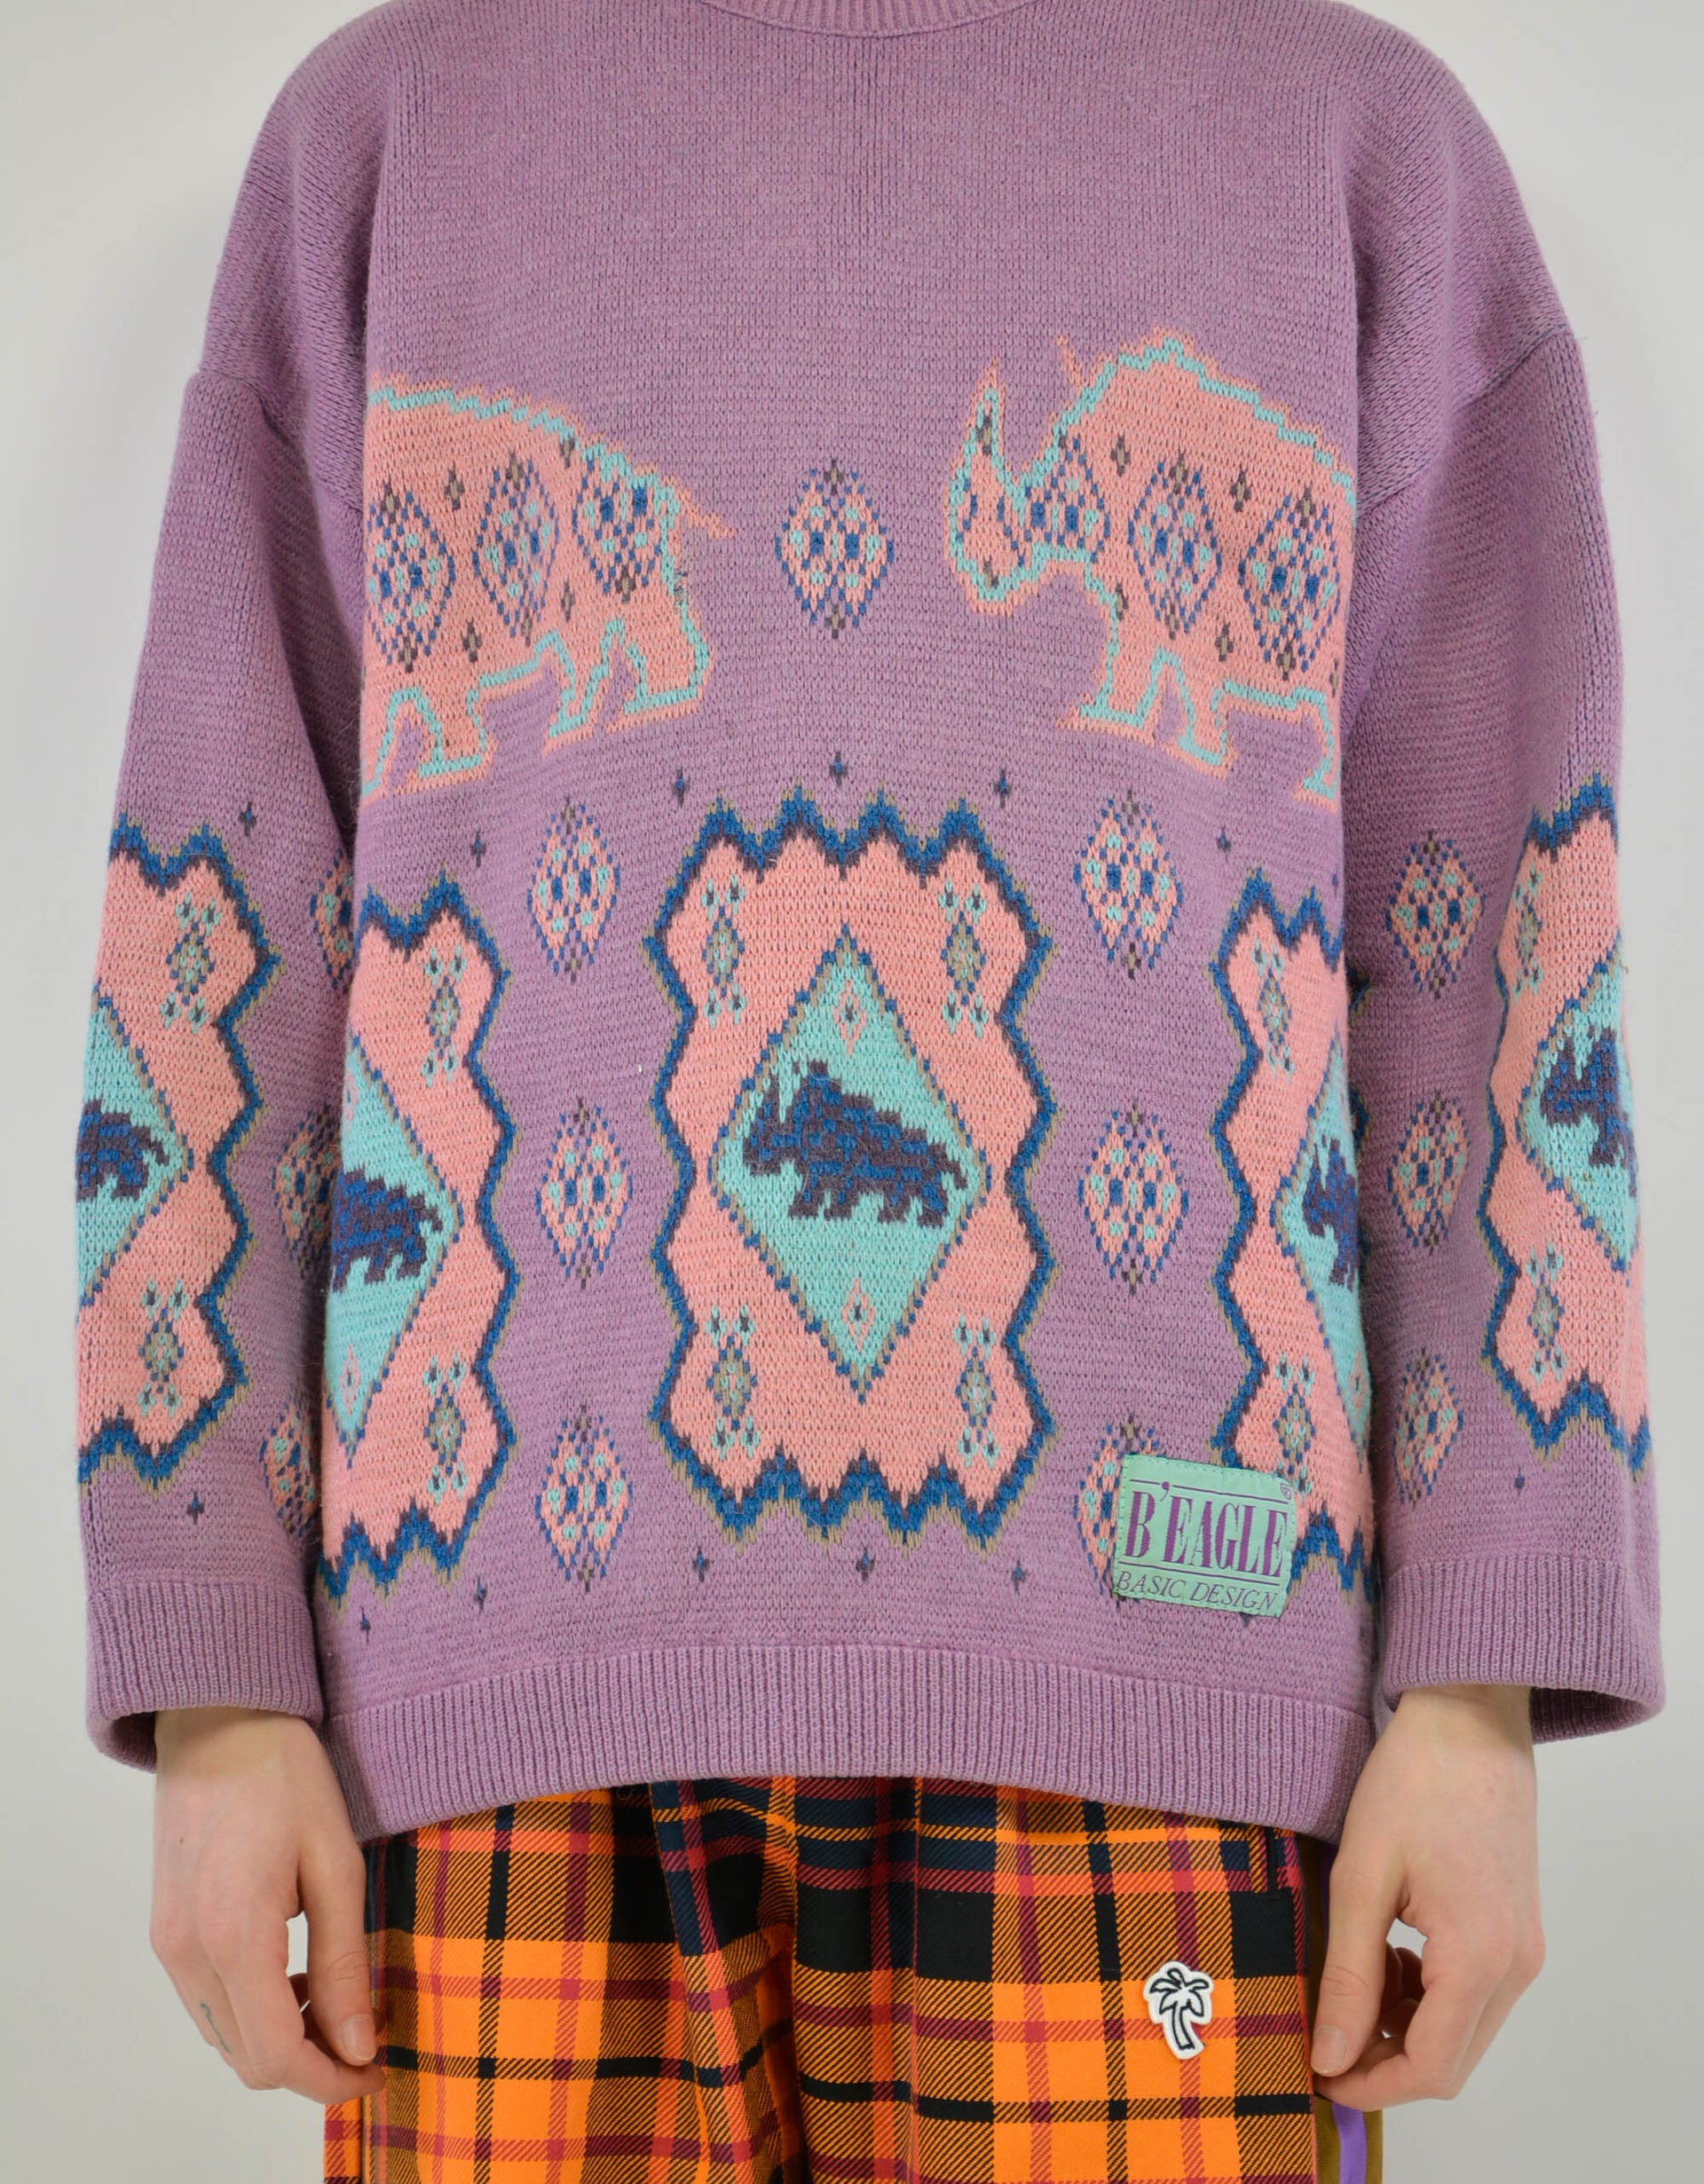 90s rhino knitwear - PICKNWEIGHT - VINTAGE KILO STORE